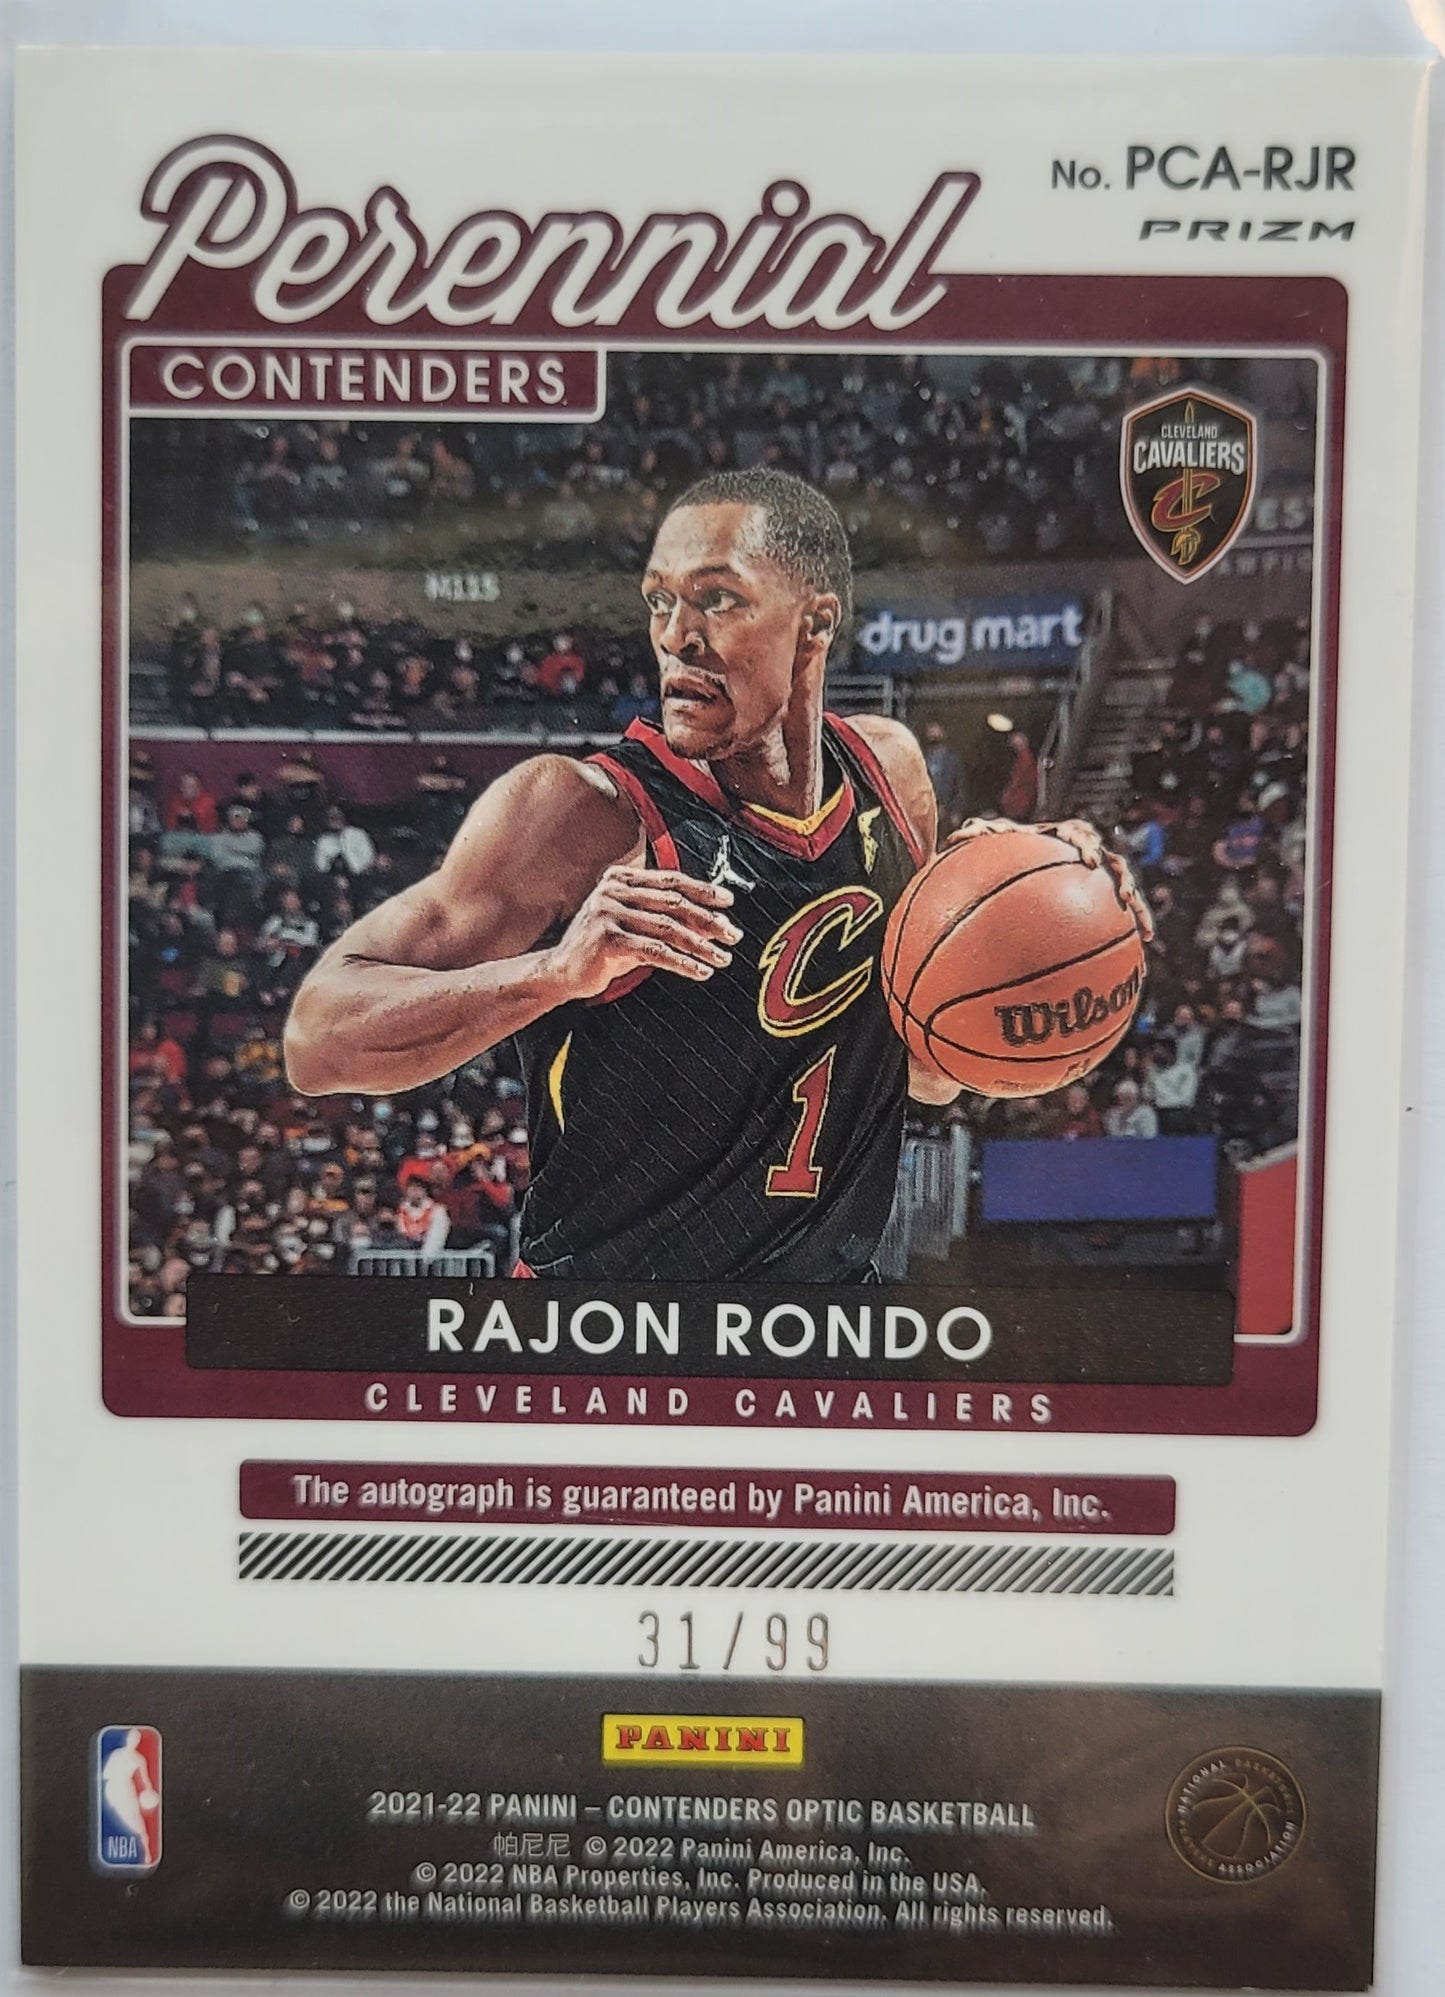 Rajon Rondo - 2021-22 Panini Contenders Optic Perennial Contenders Autographs #3 - 31/99